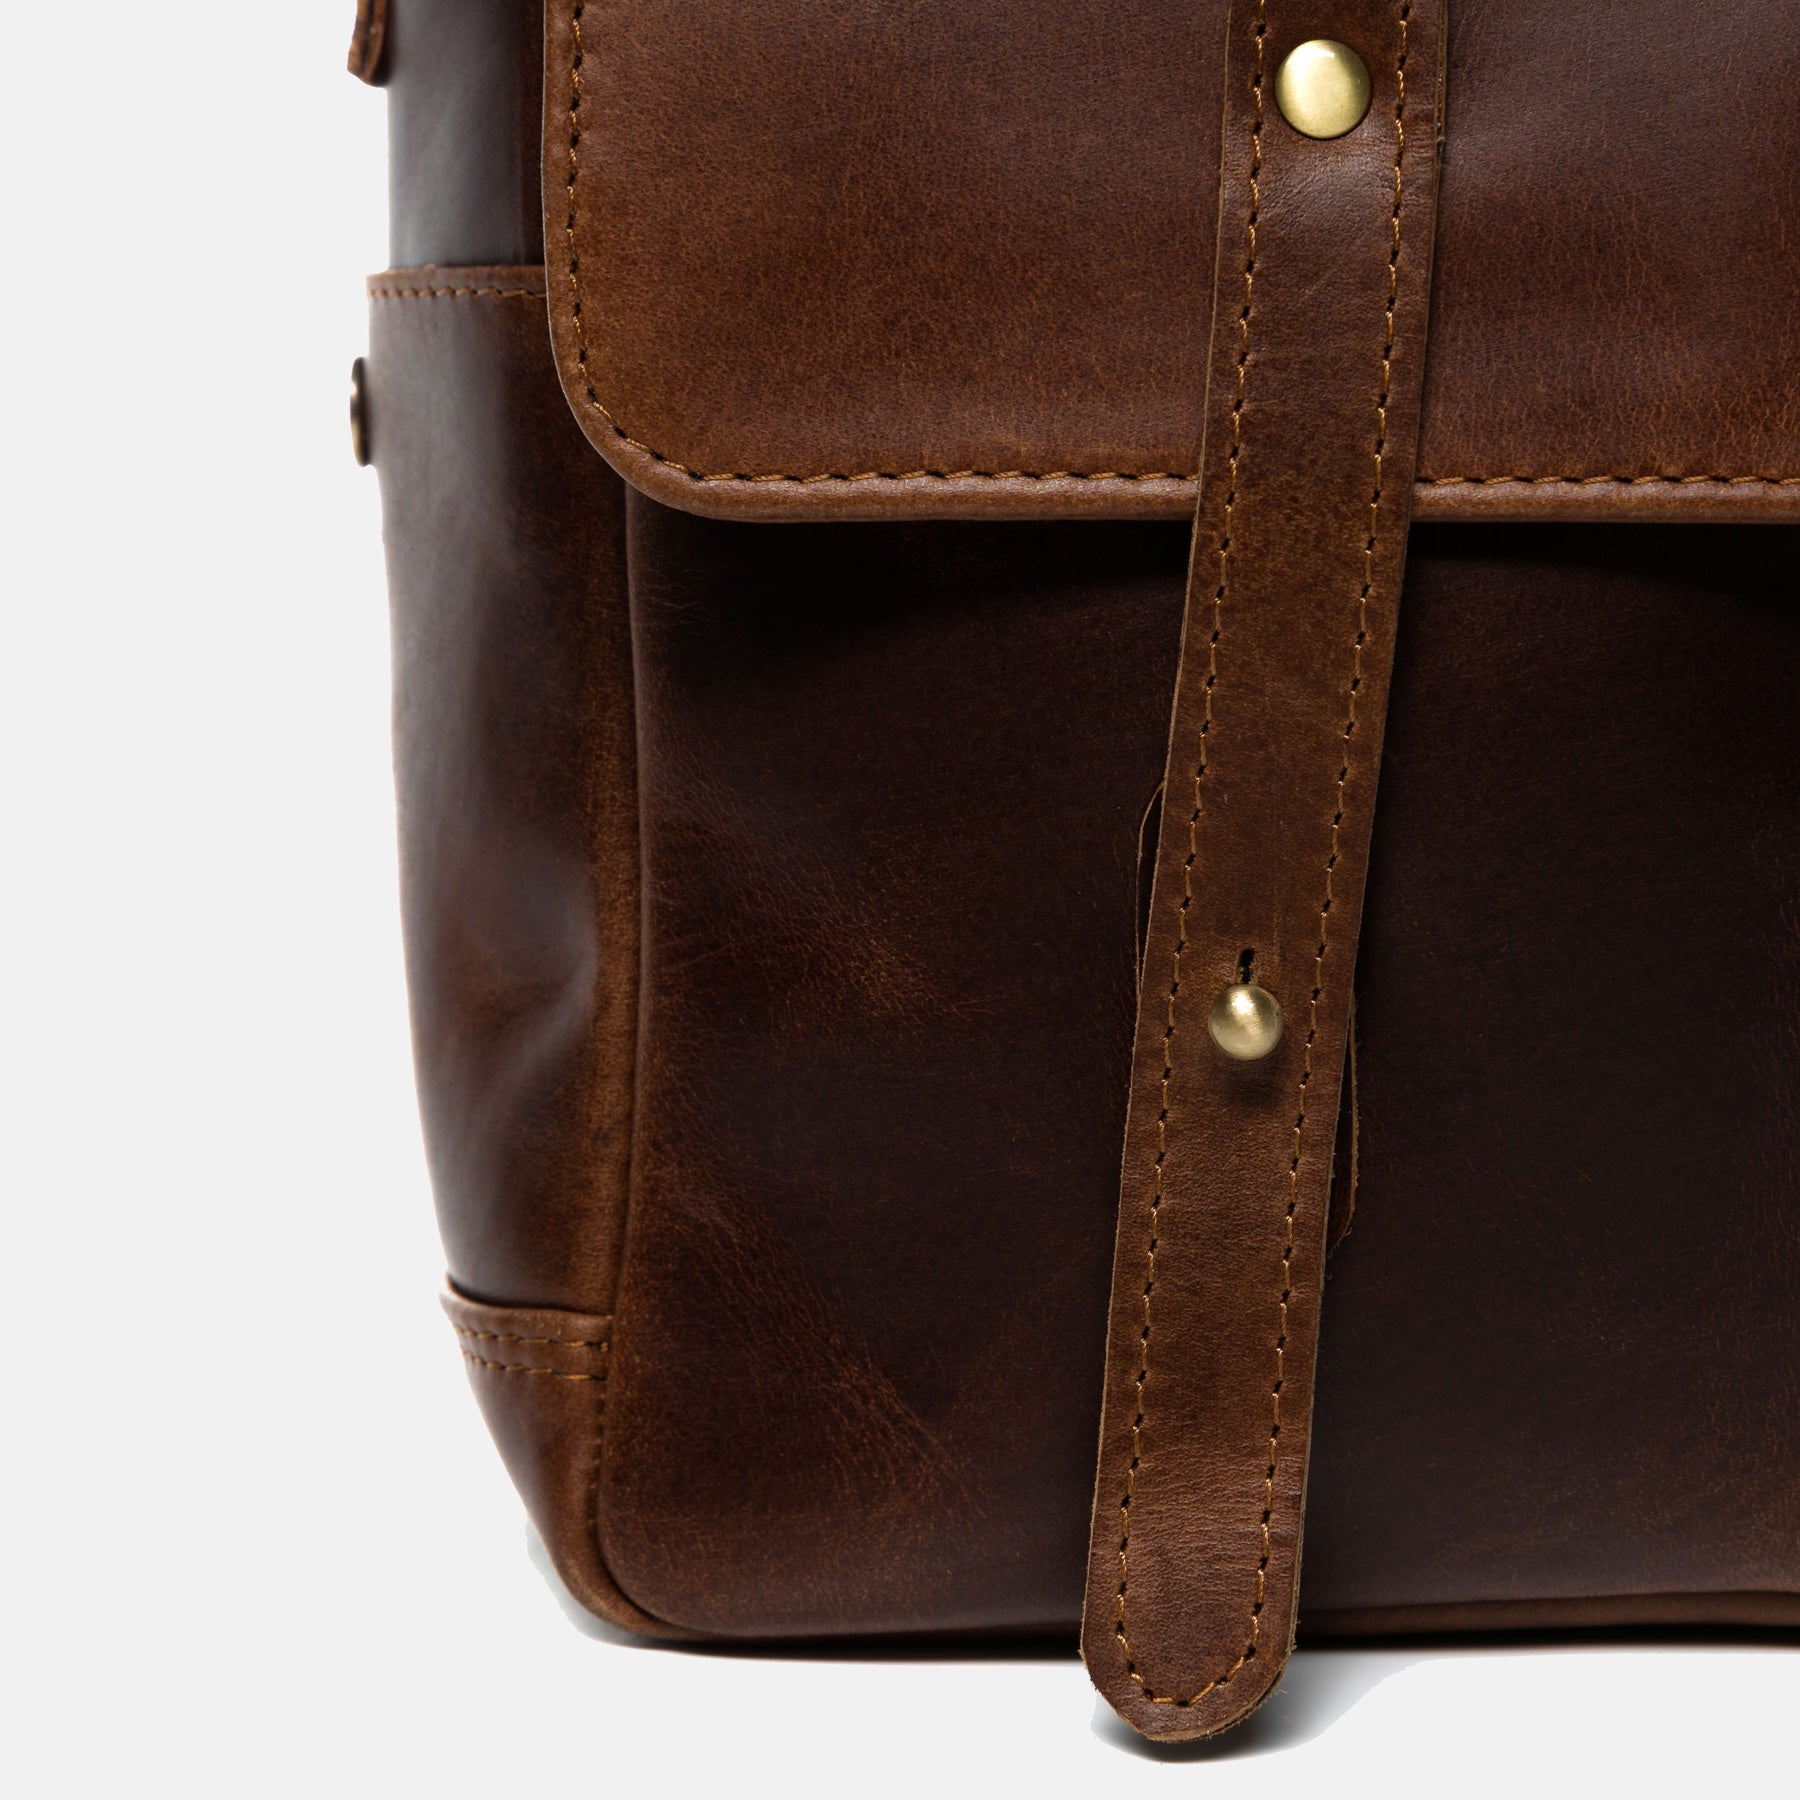 Camera bag HEATHROW natural leather brown-cognac